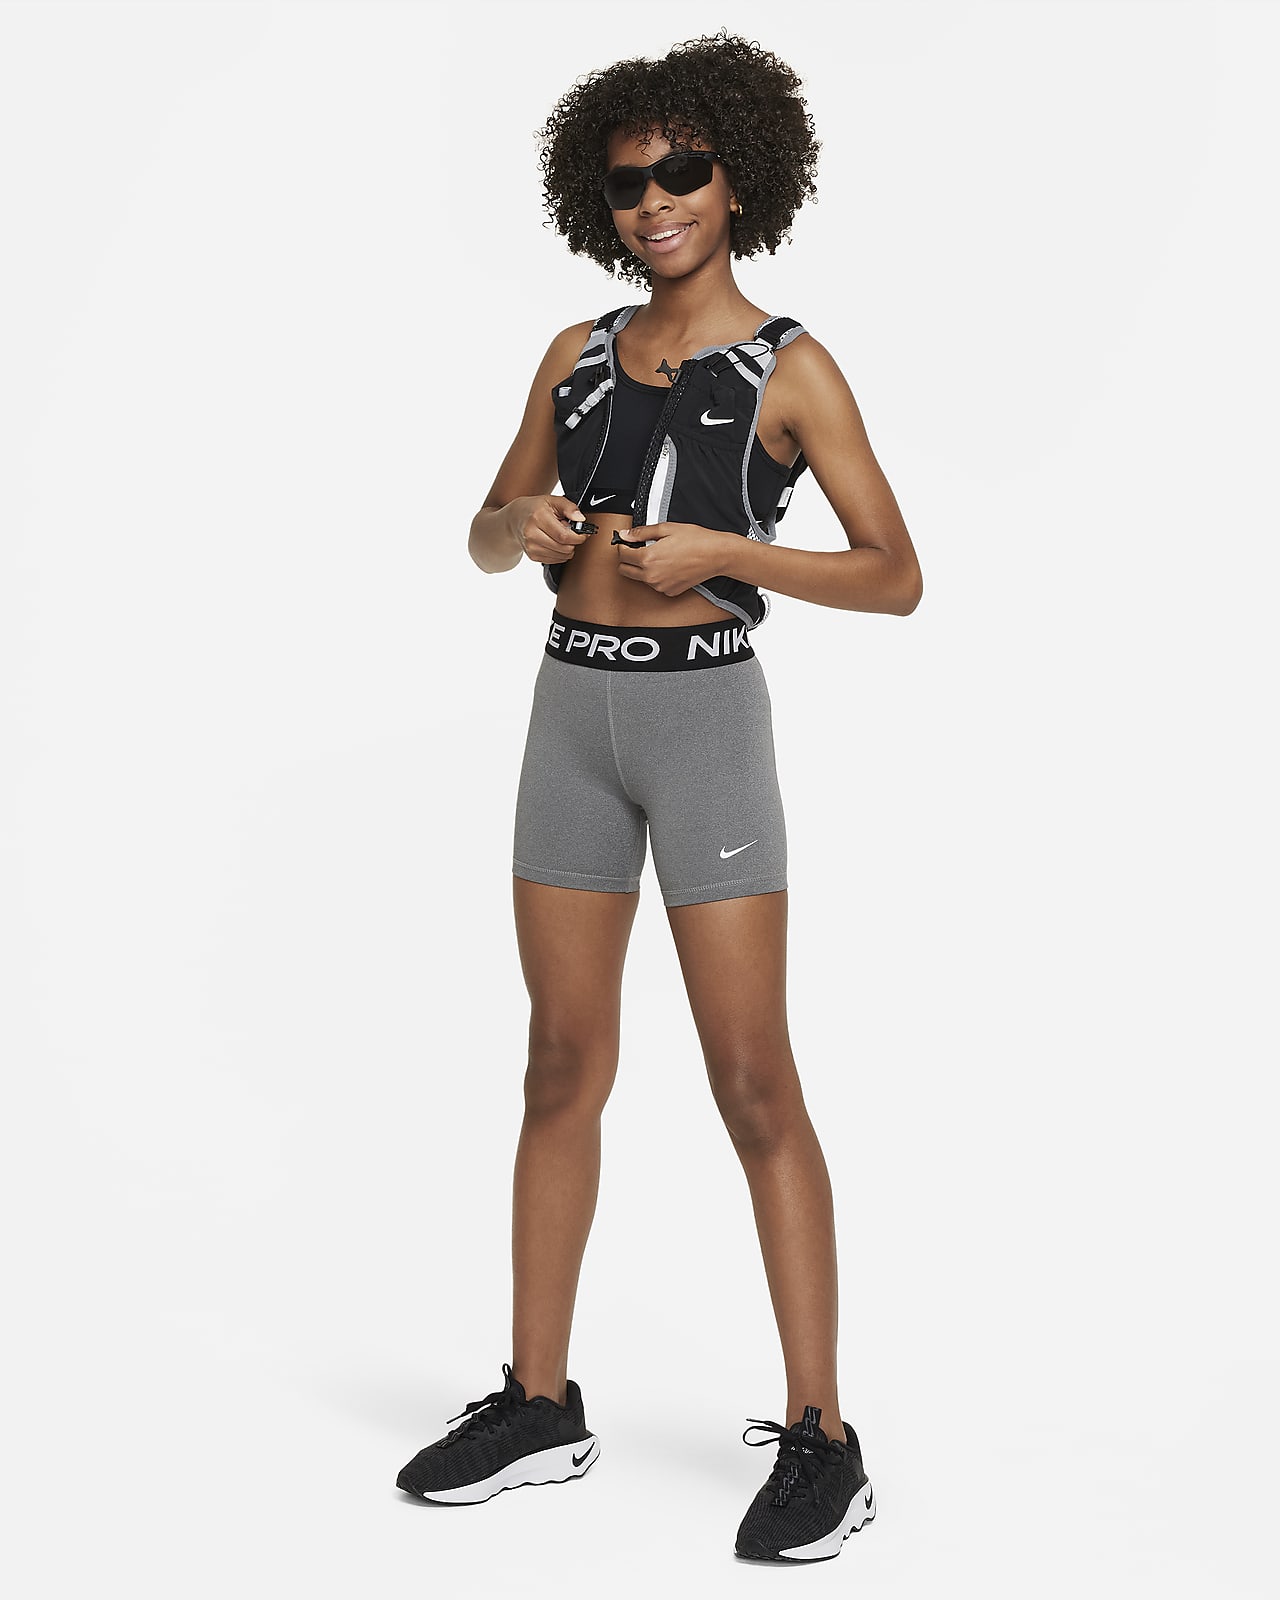 Nike Pro Big Kids' (Girls') Leggings. Nike.com